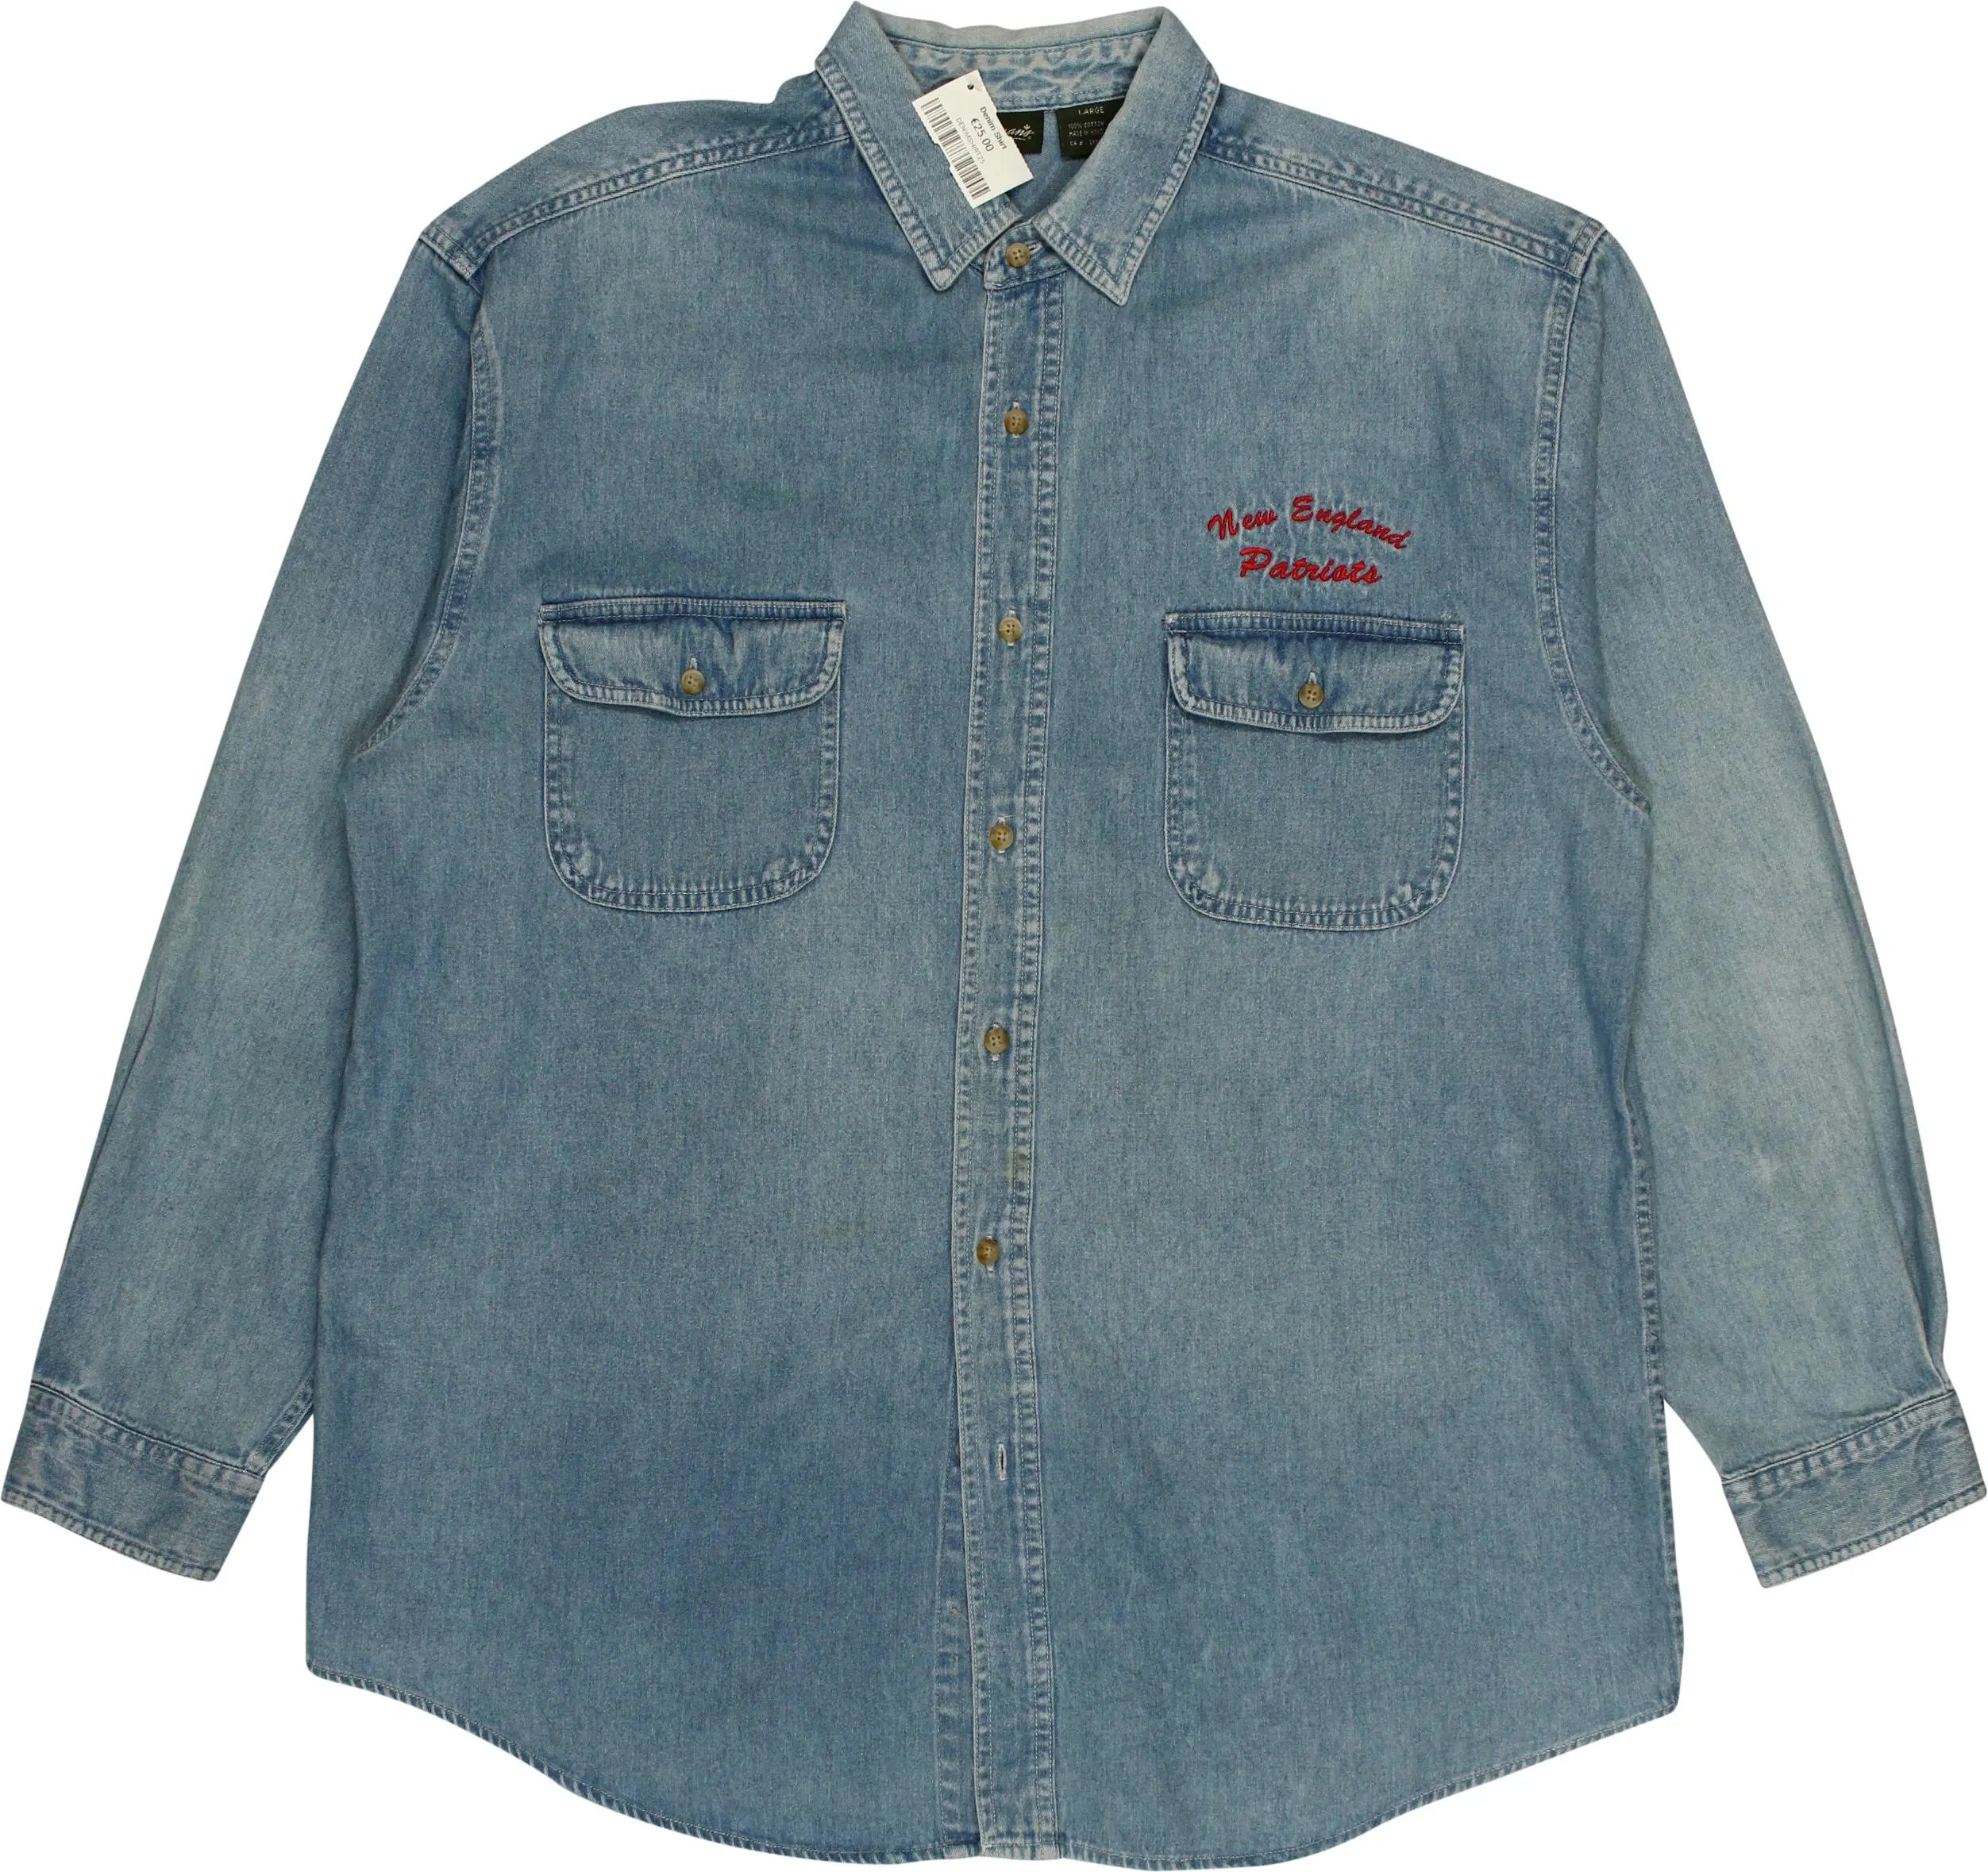 Penmans - Denim Shirt- ThriftTale.com - Vintage and second handclothing